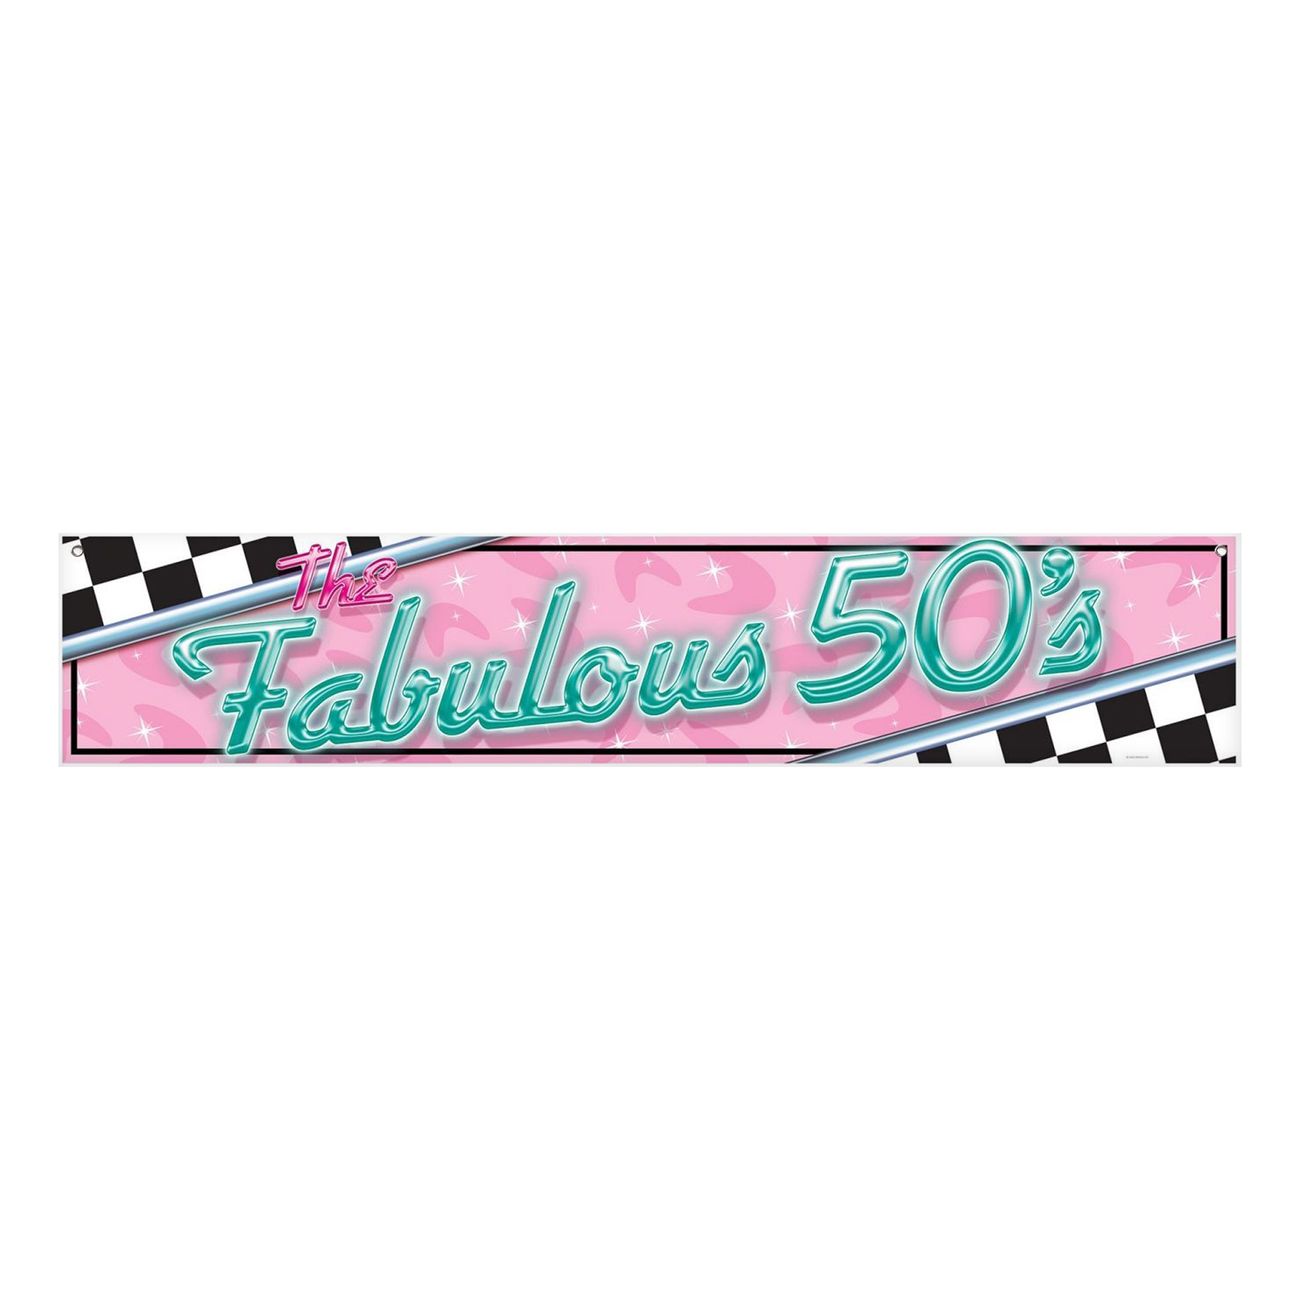 fabulous-50s-banderoll-102289-1